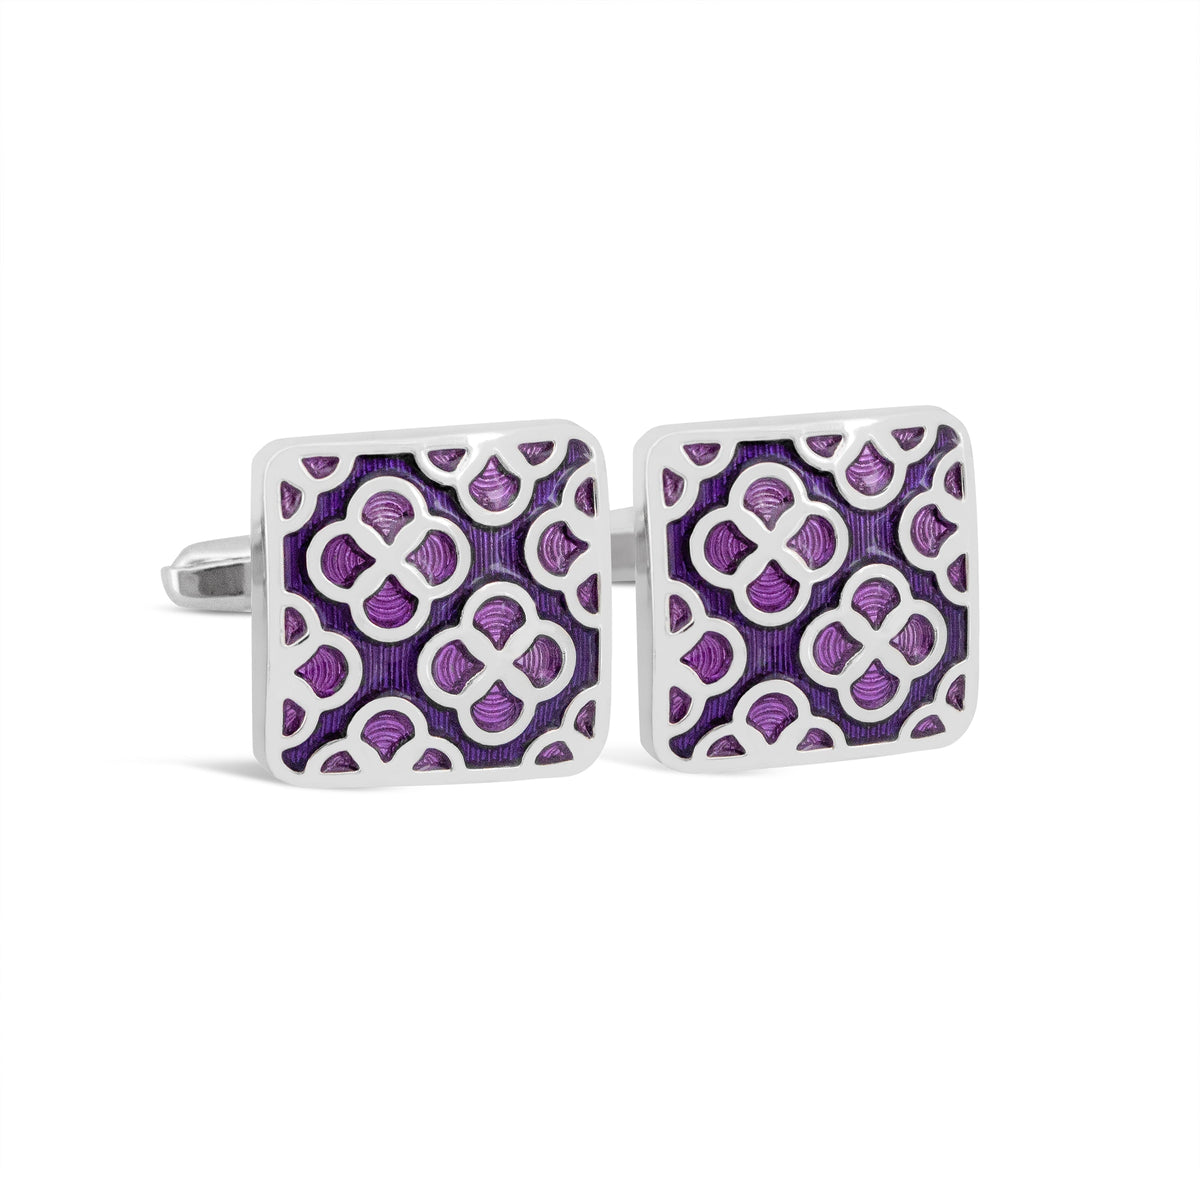 Purple Floral motif in Square Cufflinks M-Cufflinks.com.sg